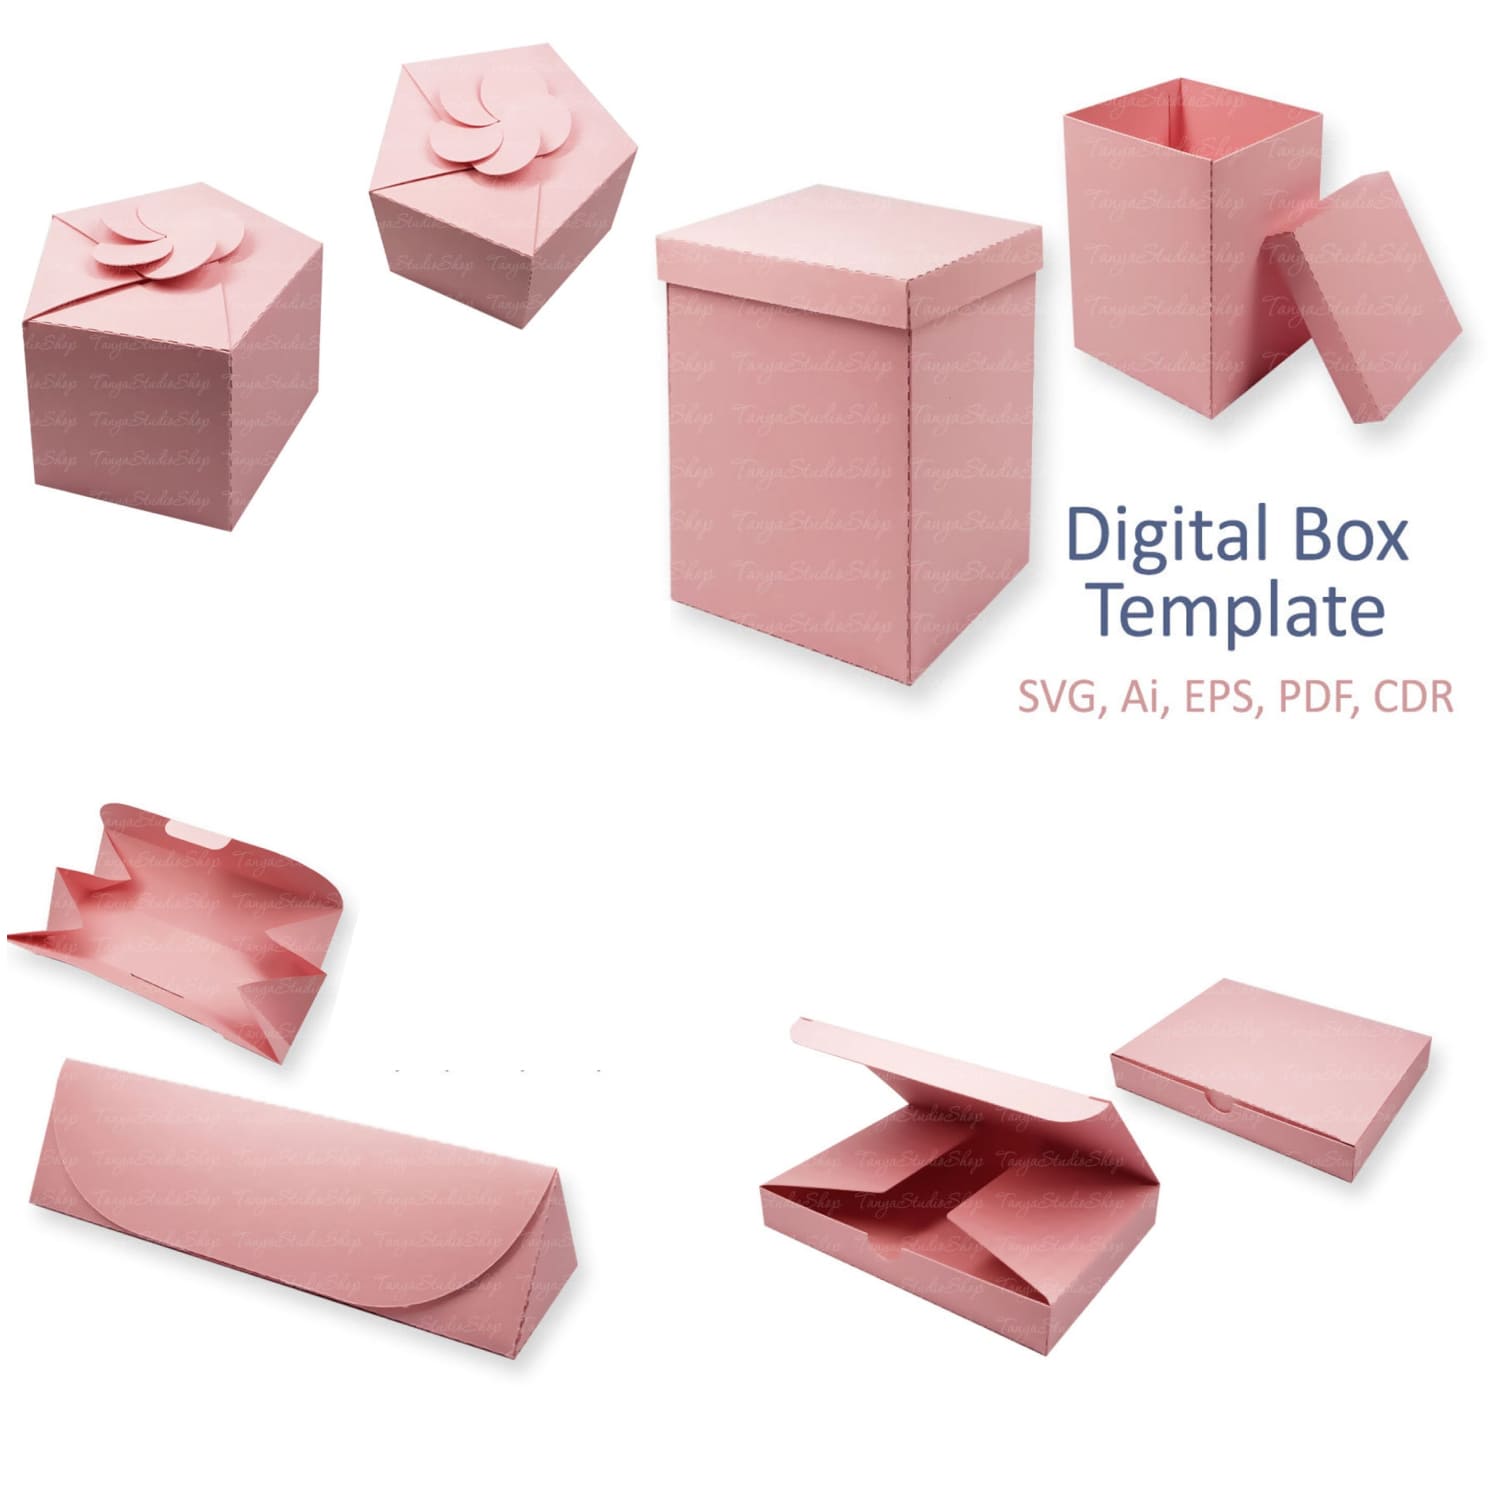 6 Basic Boxes - SVG, ai, CRD, eps, pdf - Laser Cut Template cover.